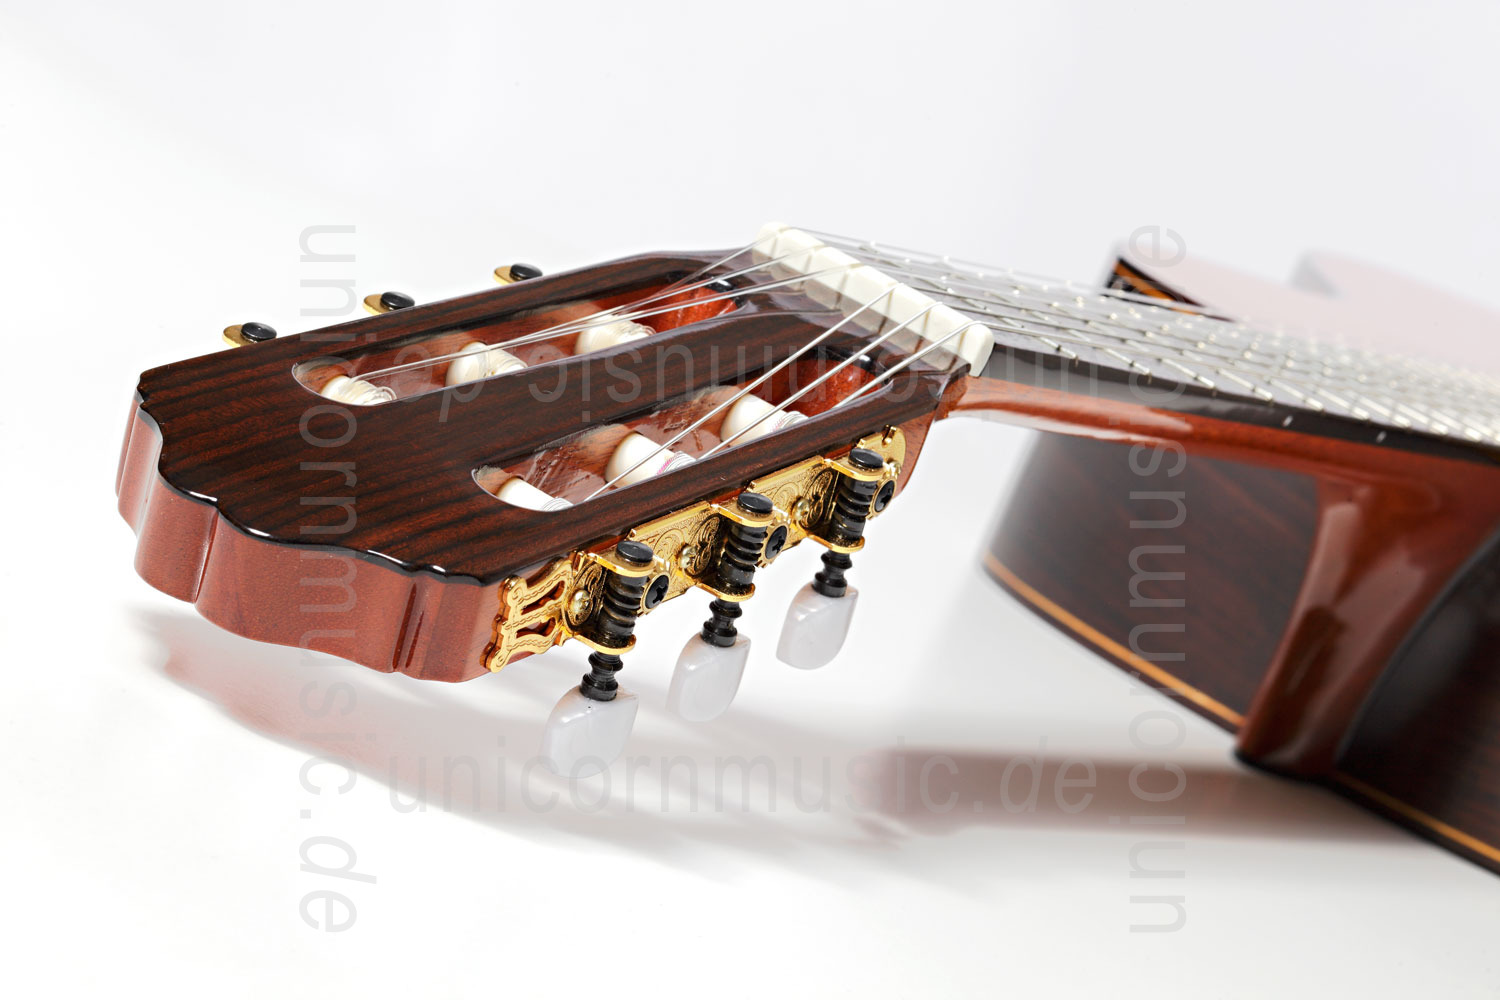 to article description / price Spanish Classical Guitar VALDEZ MODEL 7 Cedar - solid top